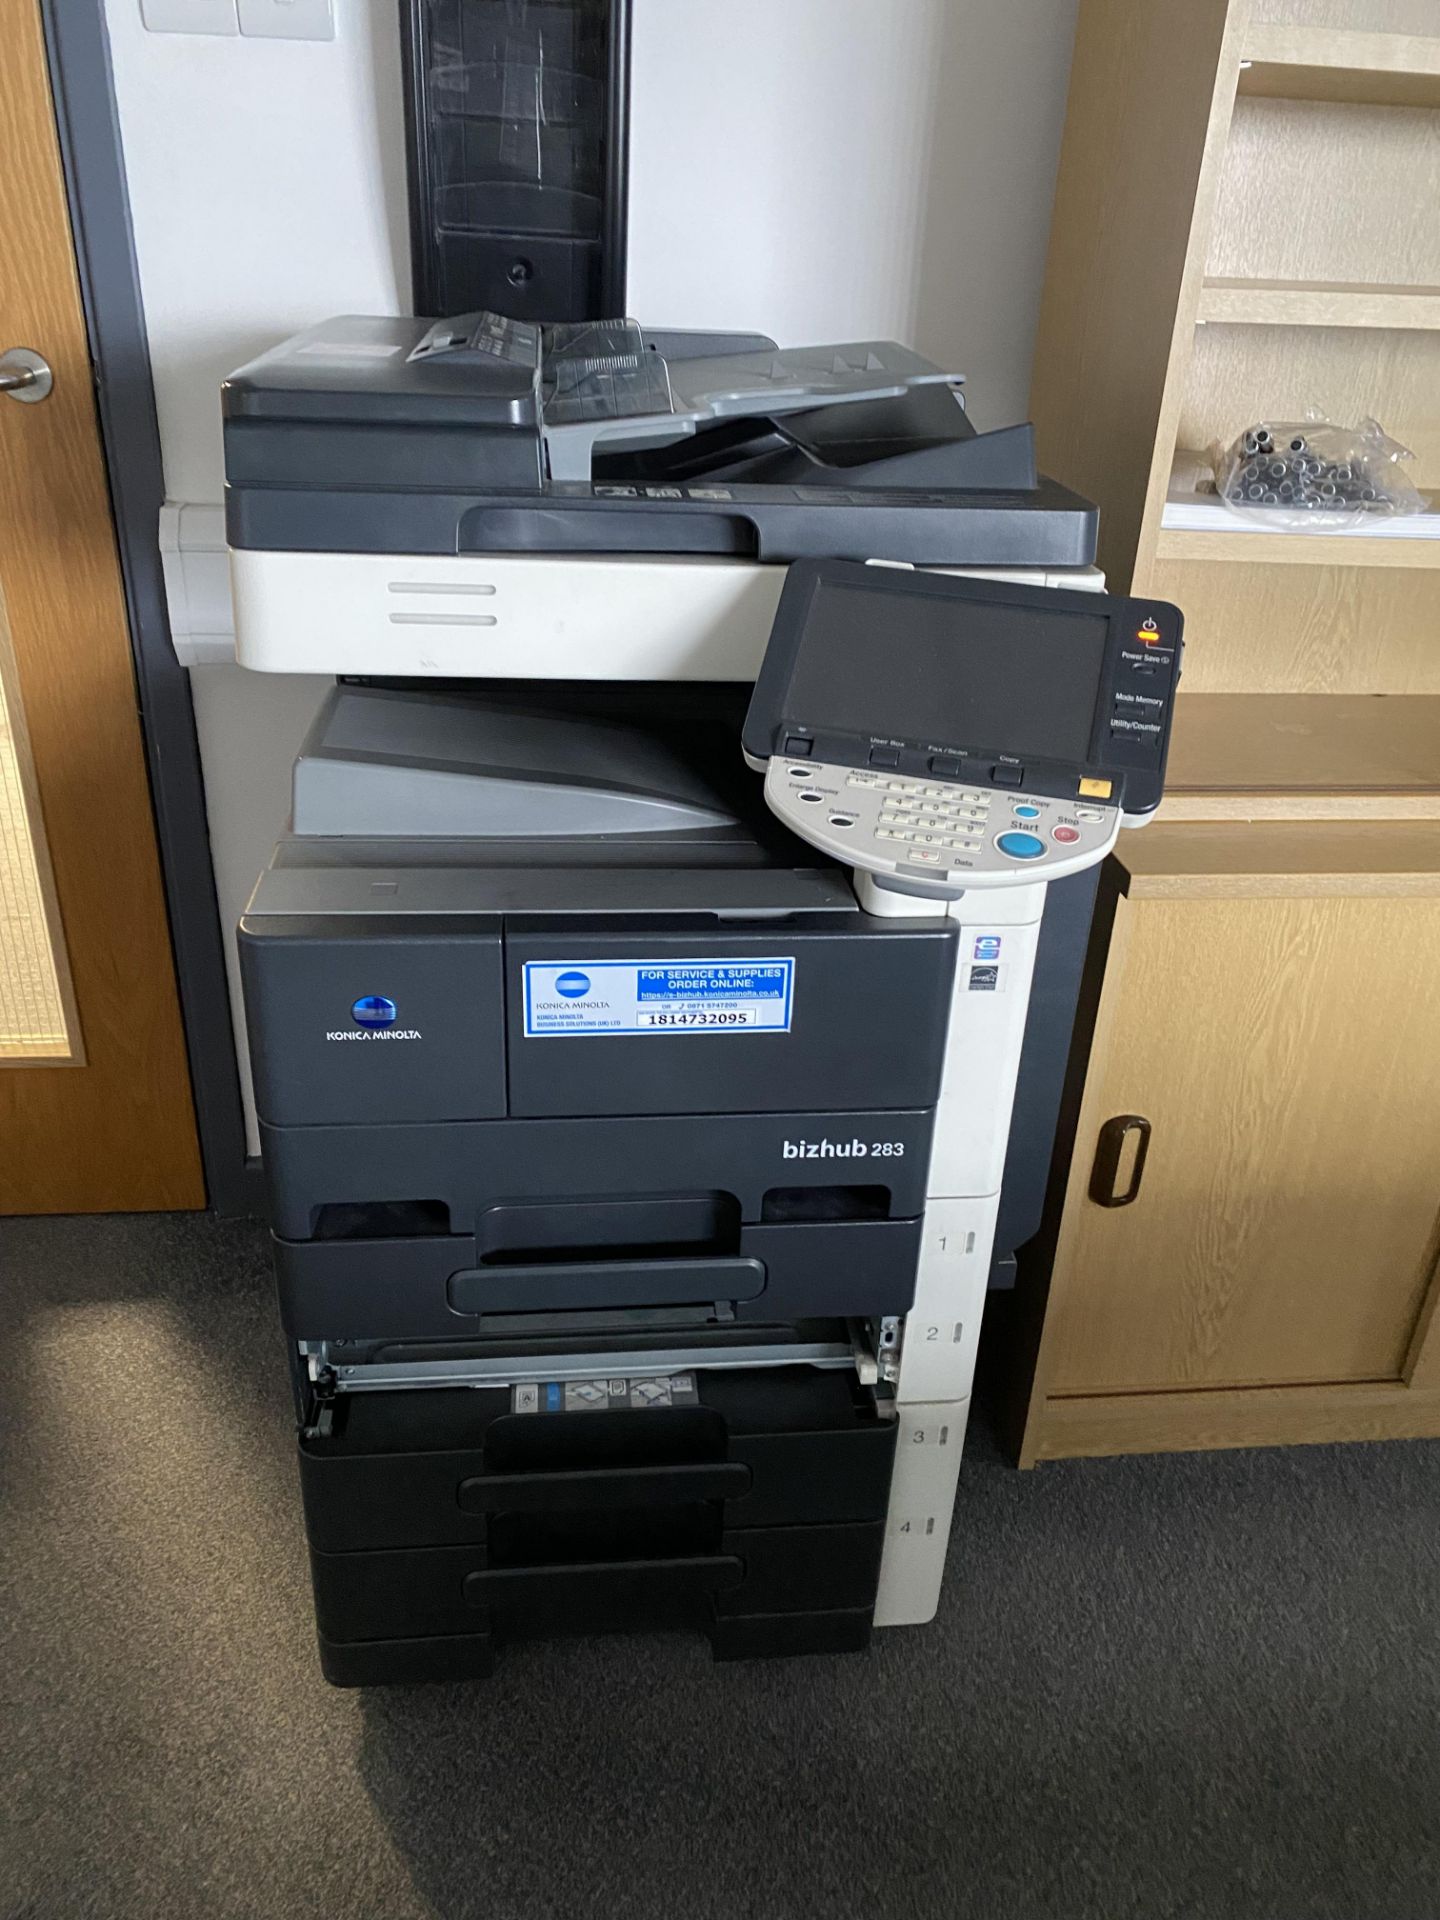 Bizhub 283 printer